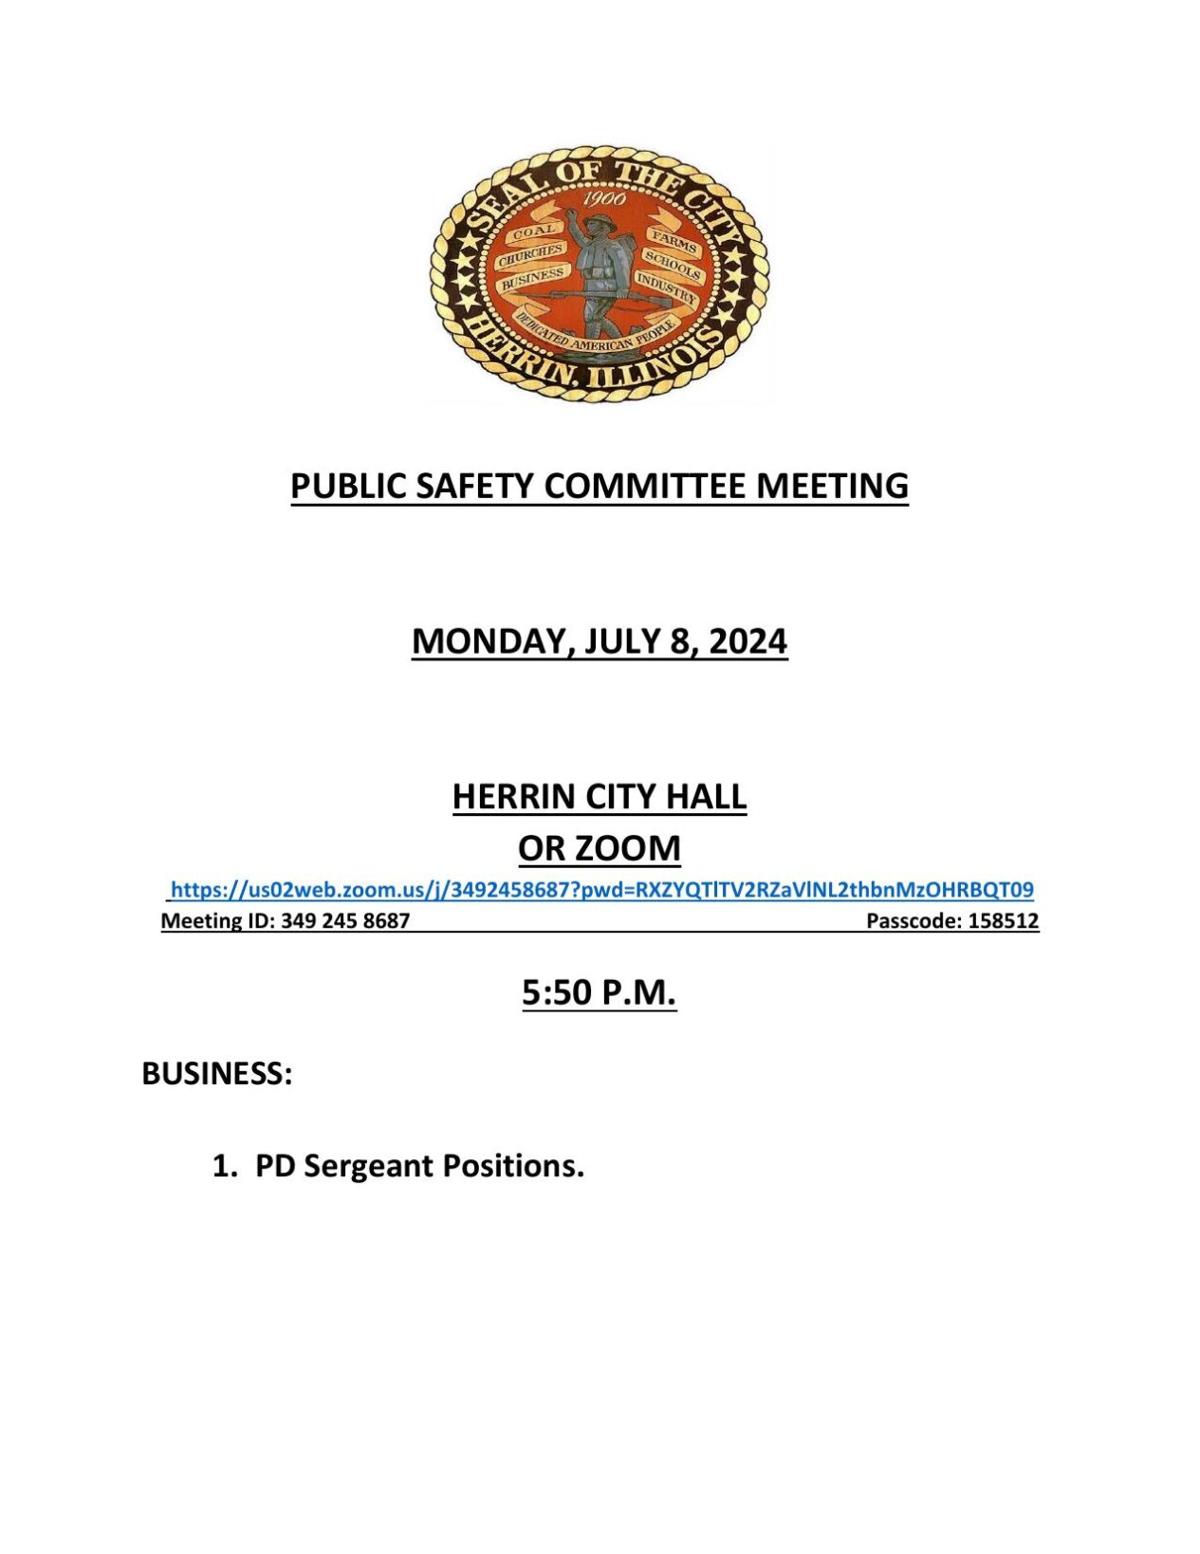 herrin public safety committee meeting agenda